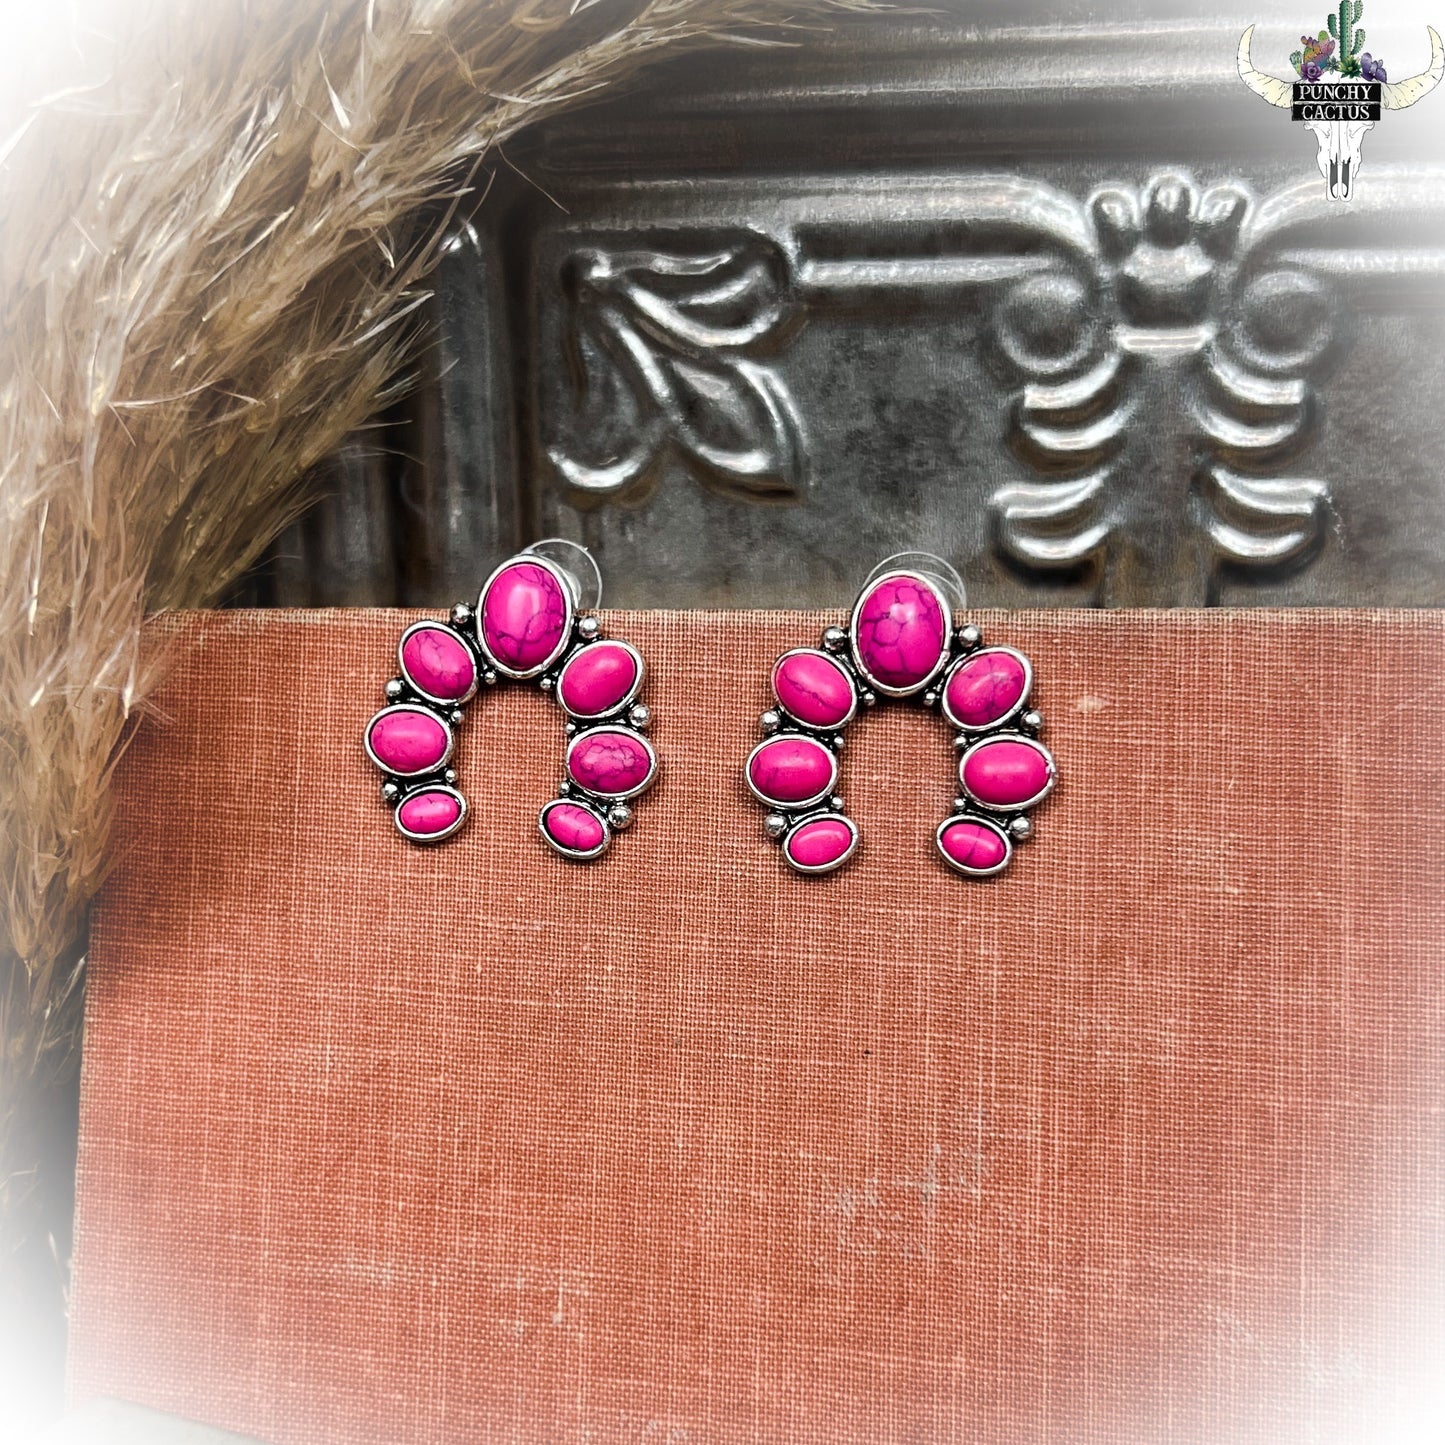 z-Squash Blossom Stud Earrings - Hot Pink